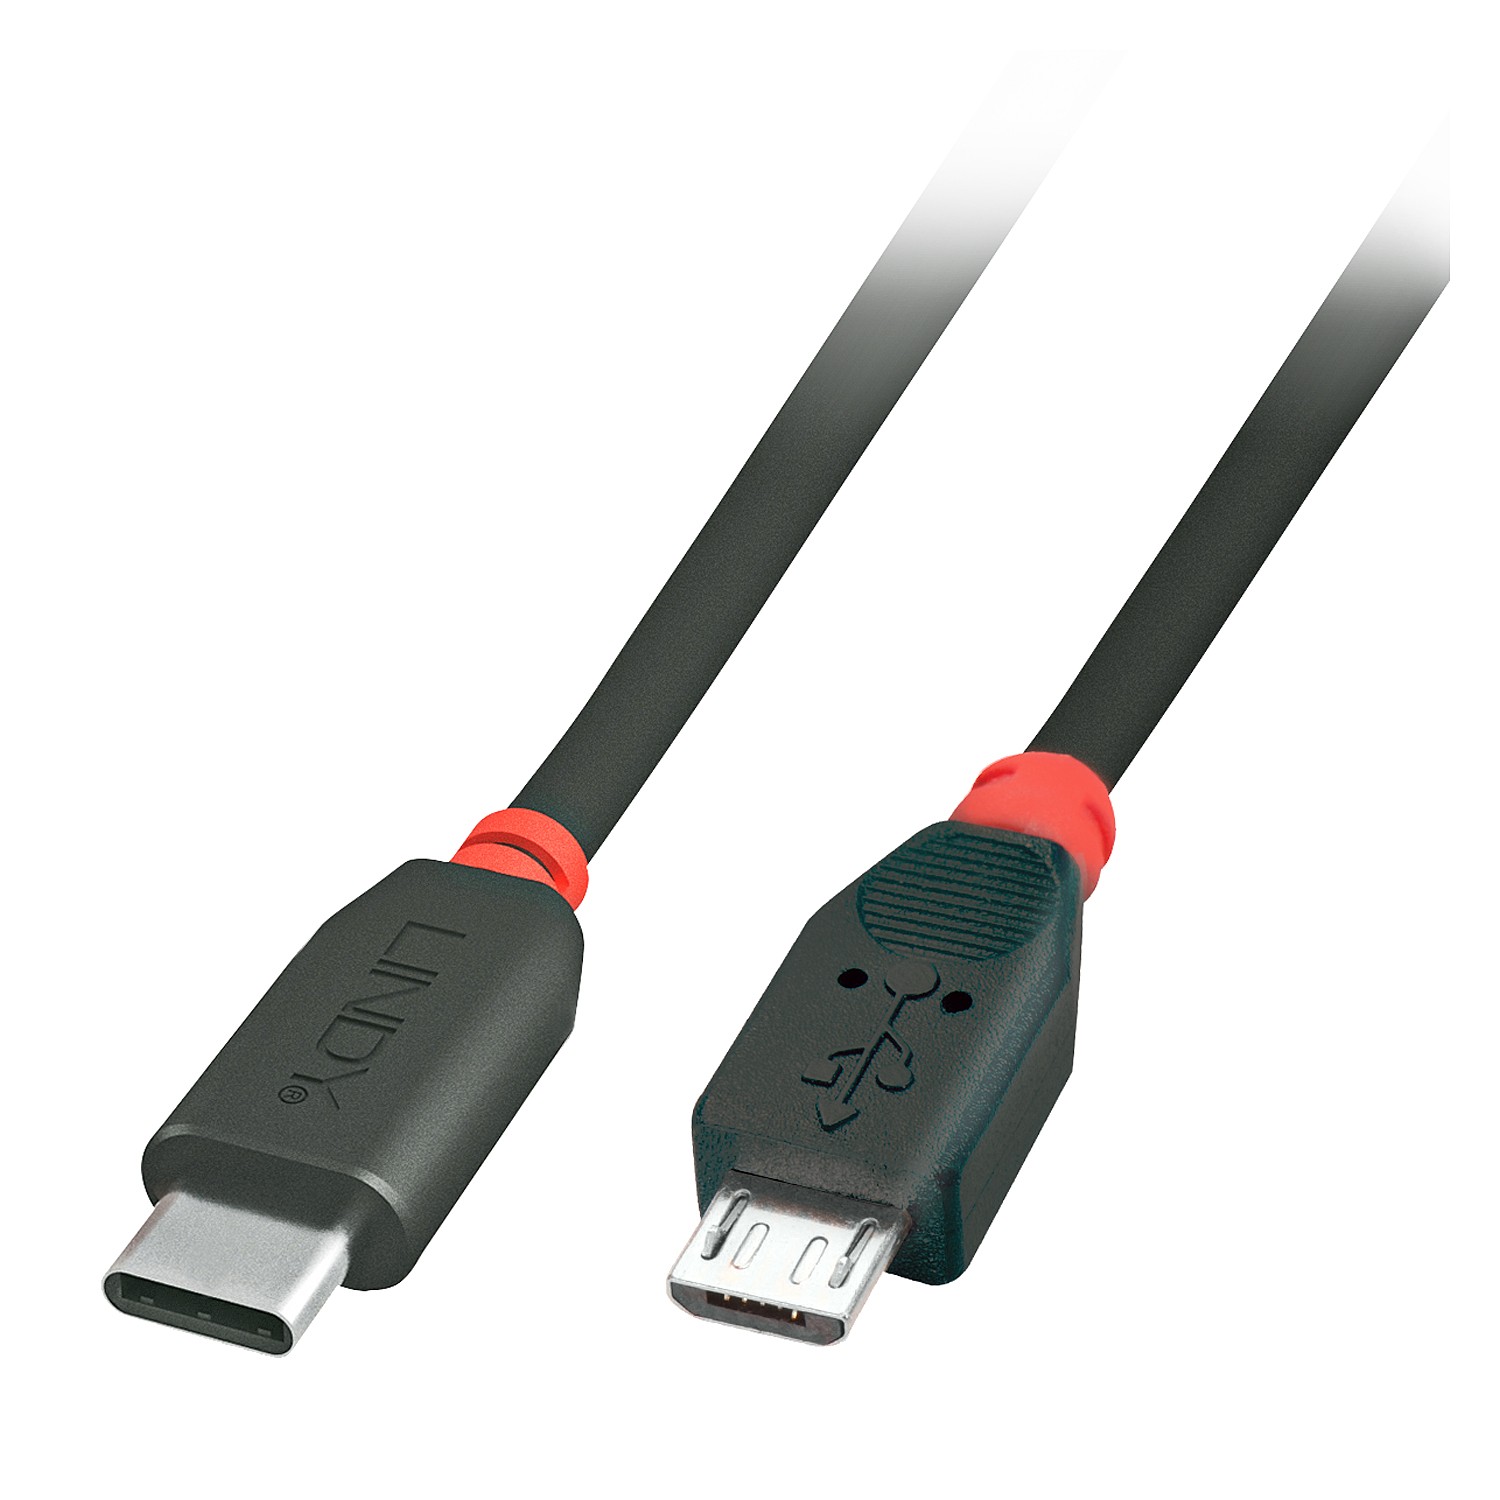 Microusb usb c. Кабель Micro USB 3.0 B 2 USB. USB 2.0 Type-a MICROUSB 2.0. Кабель Micro USB Type c. USB 2.0 TYPEC кабель.